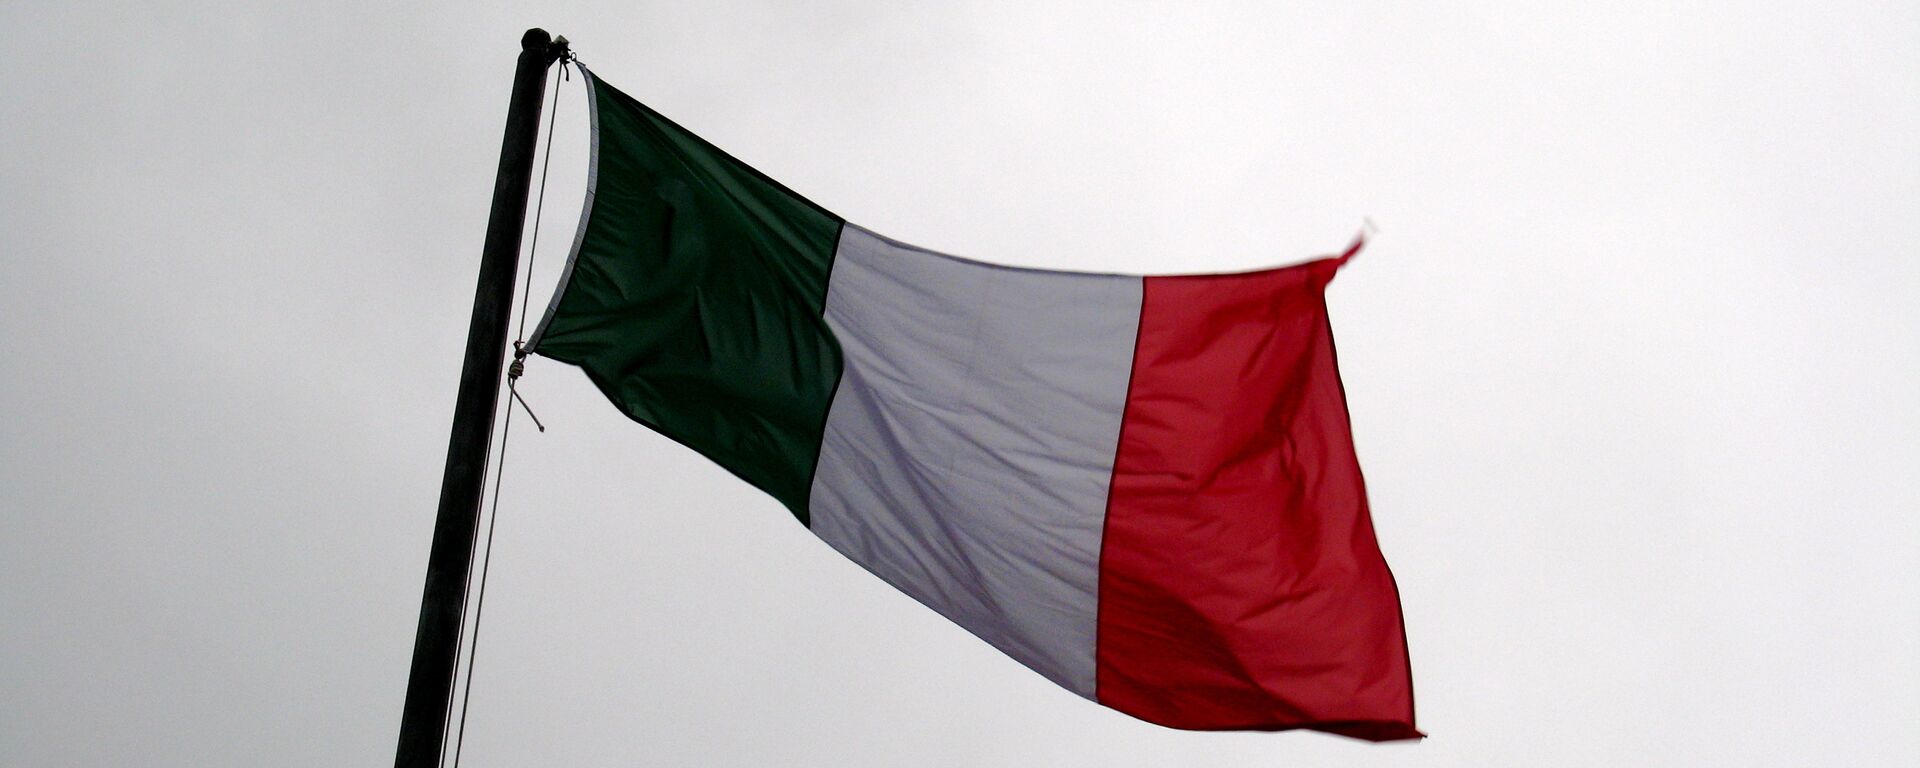 Bandera de Italia - Sputnik Mundo, 1920, 11.11.2021